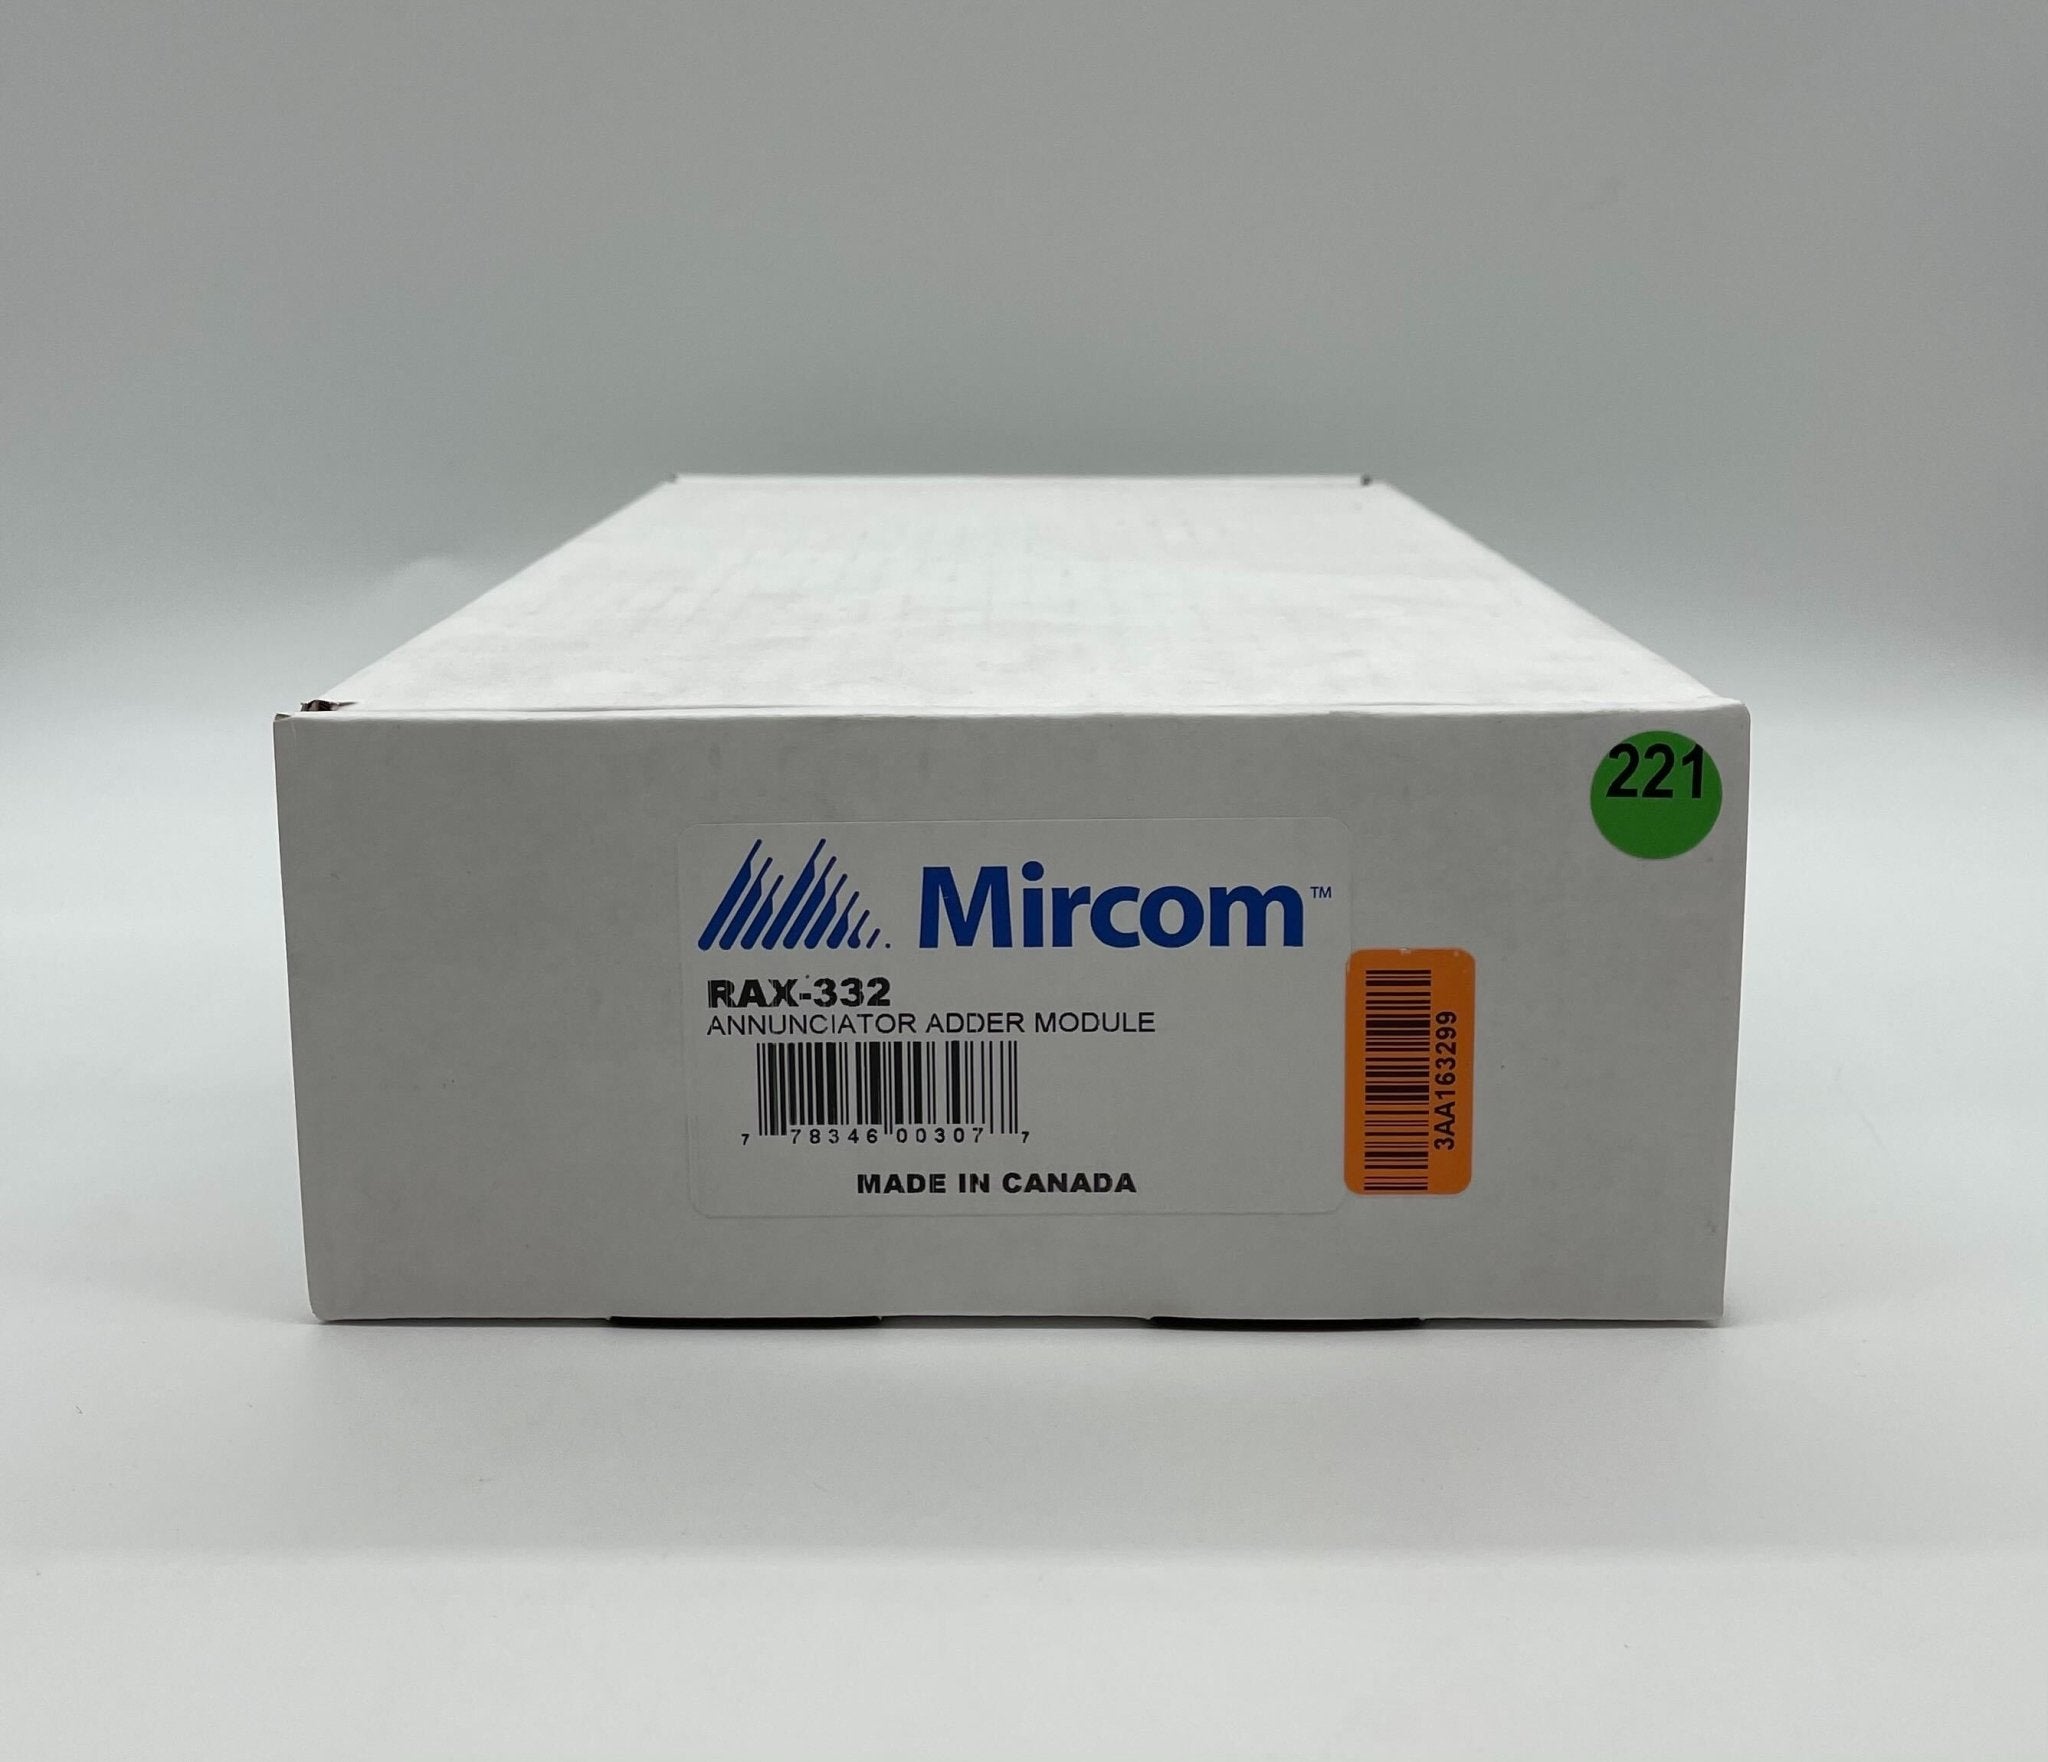 Mircom RAX-332 - The Fire Alarm Supplier